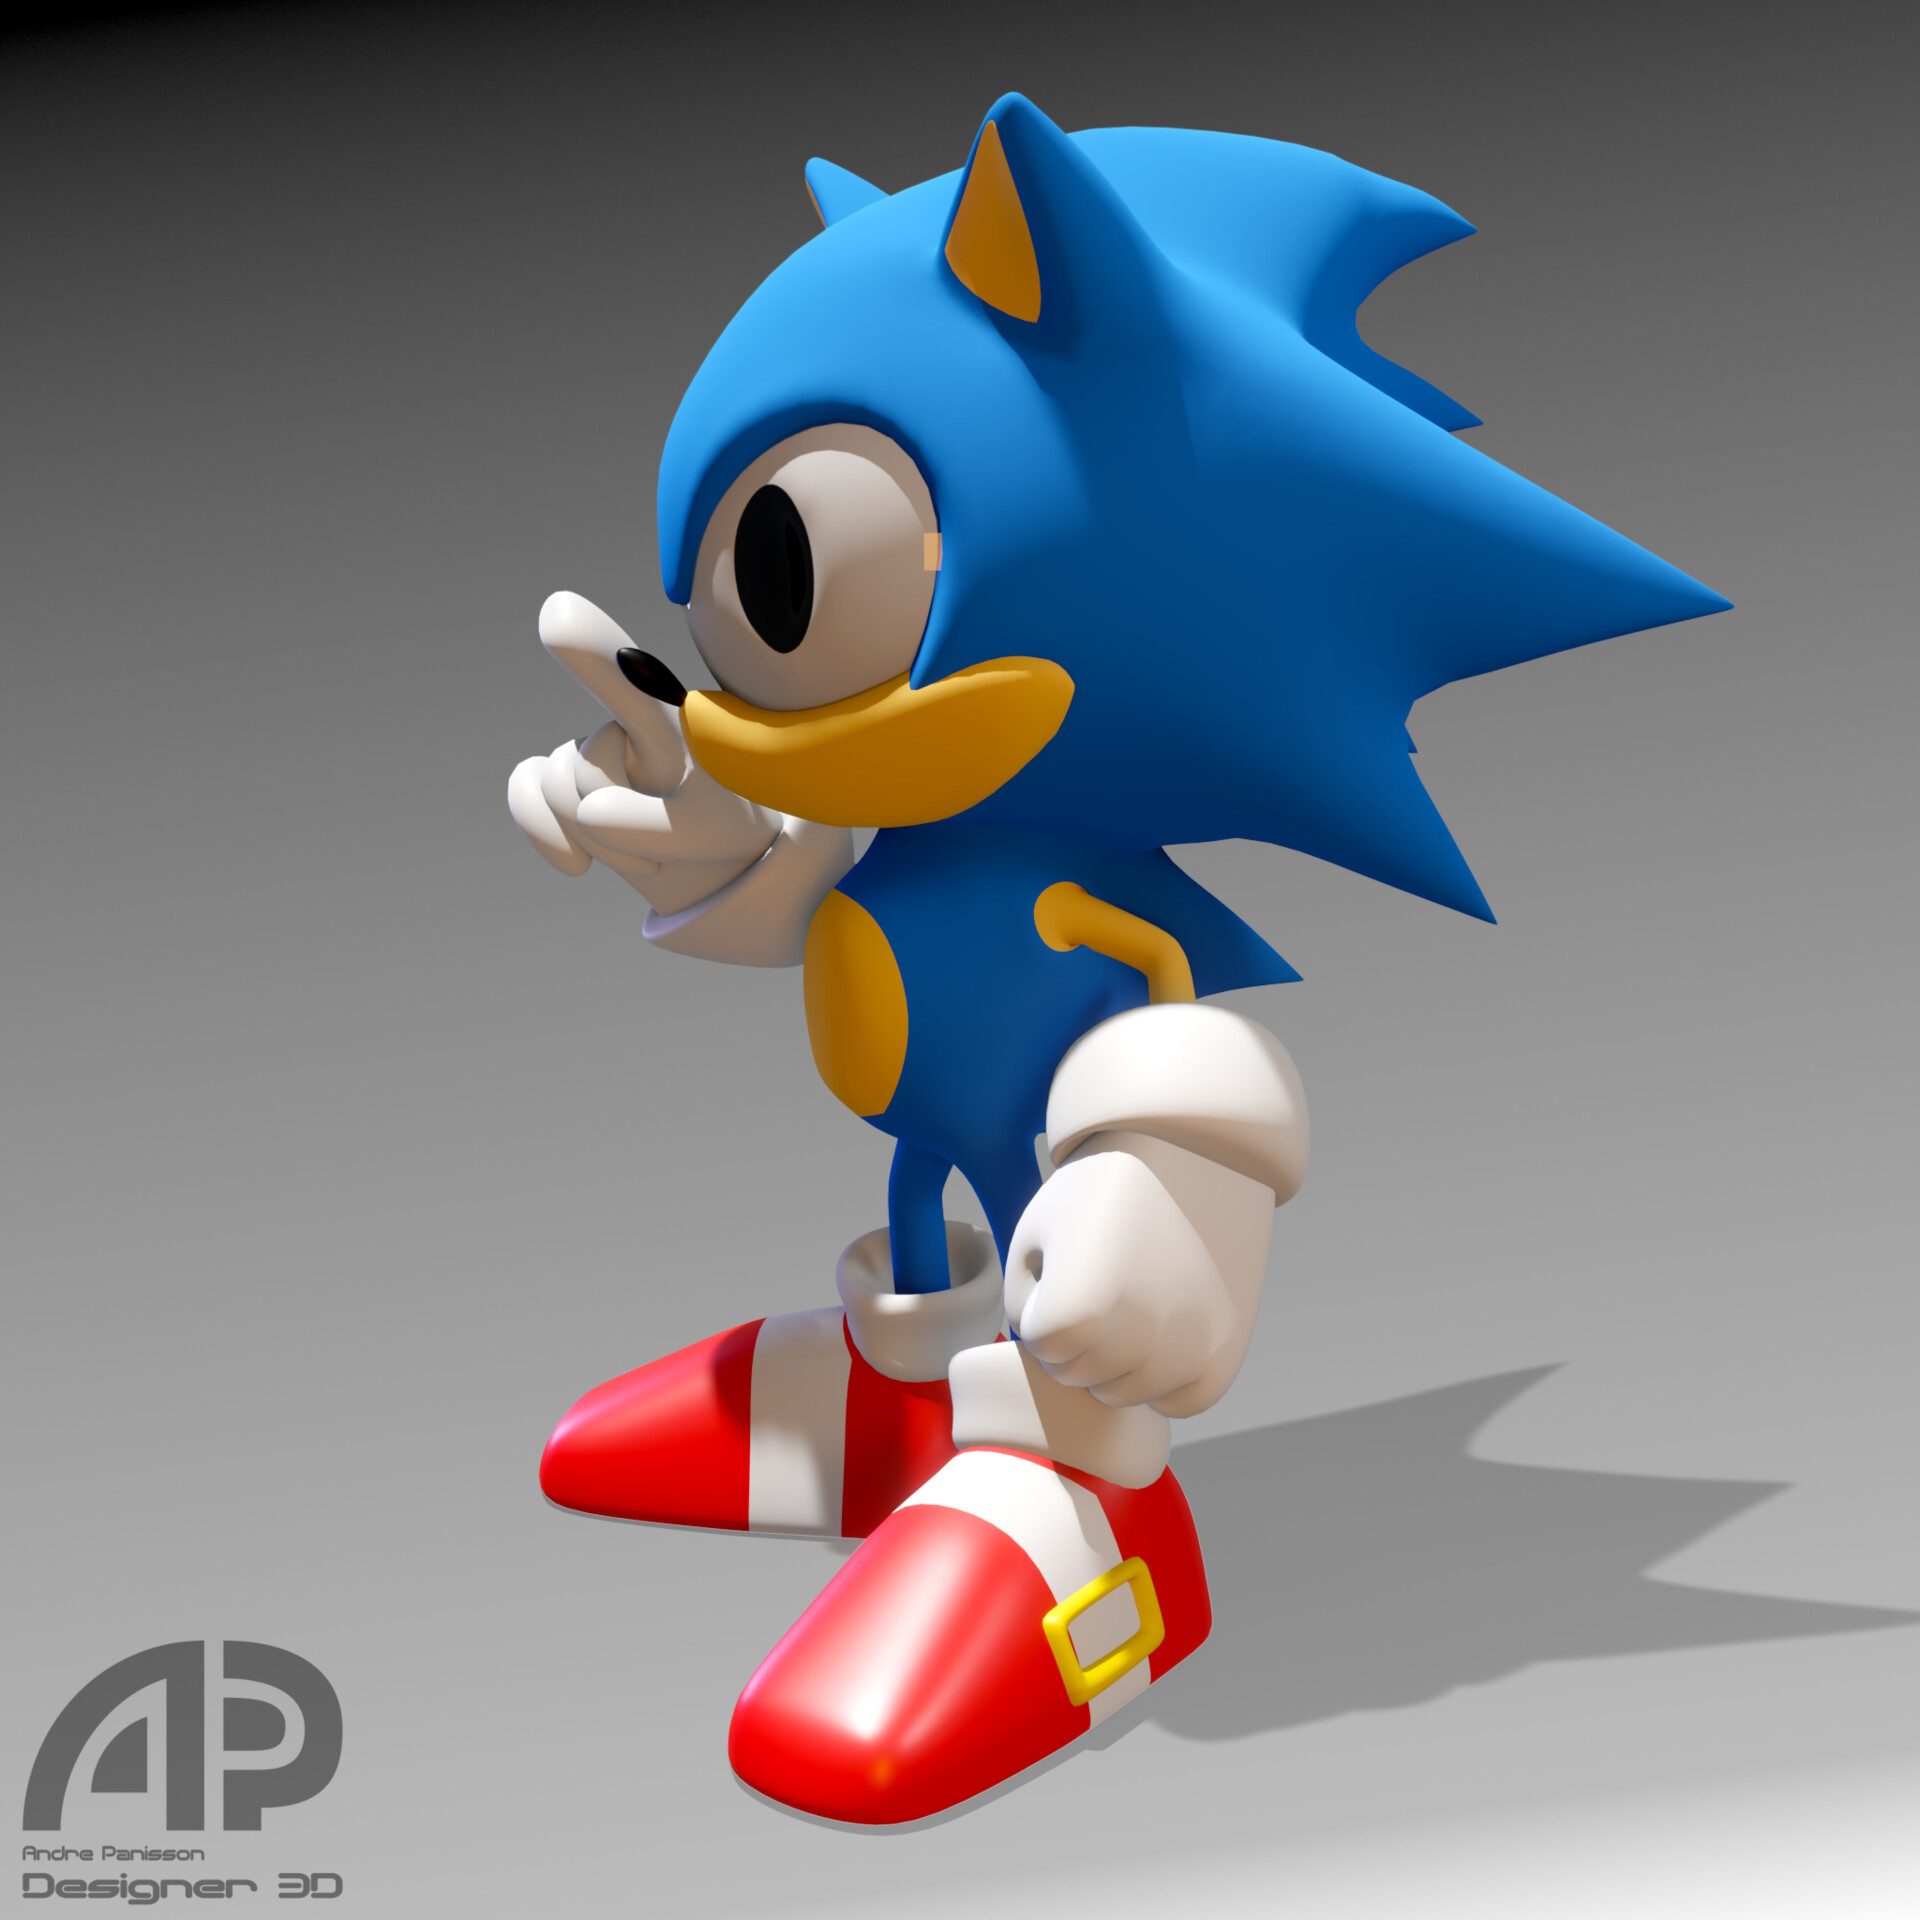 ArtStation - 2021 Art: #83 - Classic Sonic